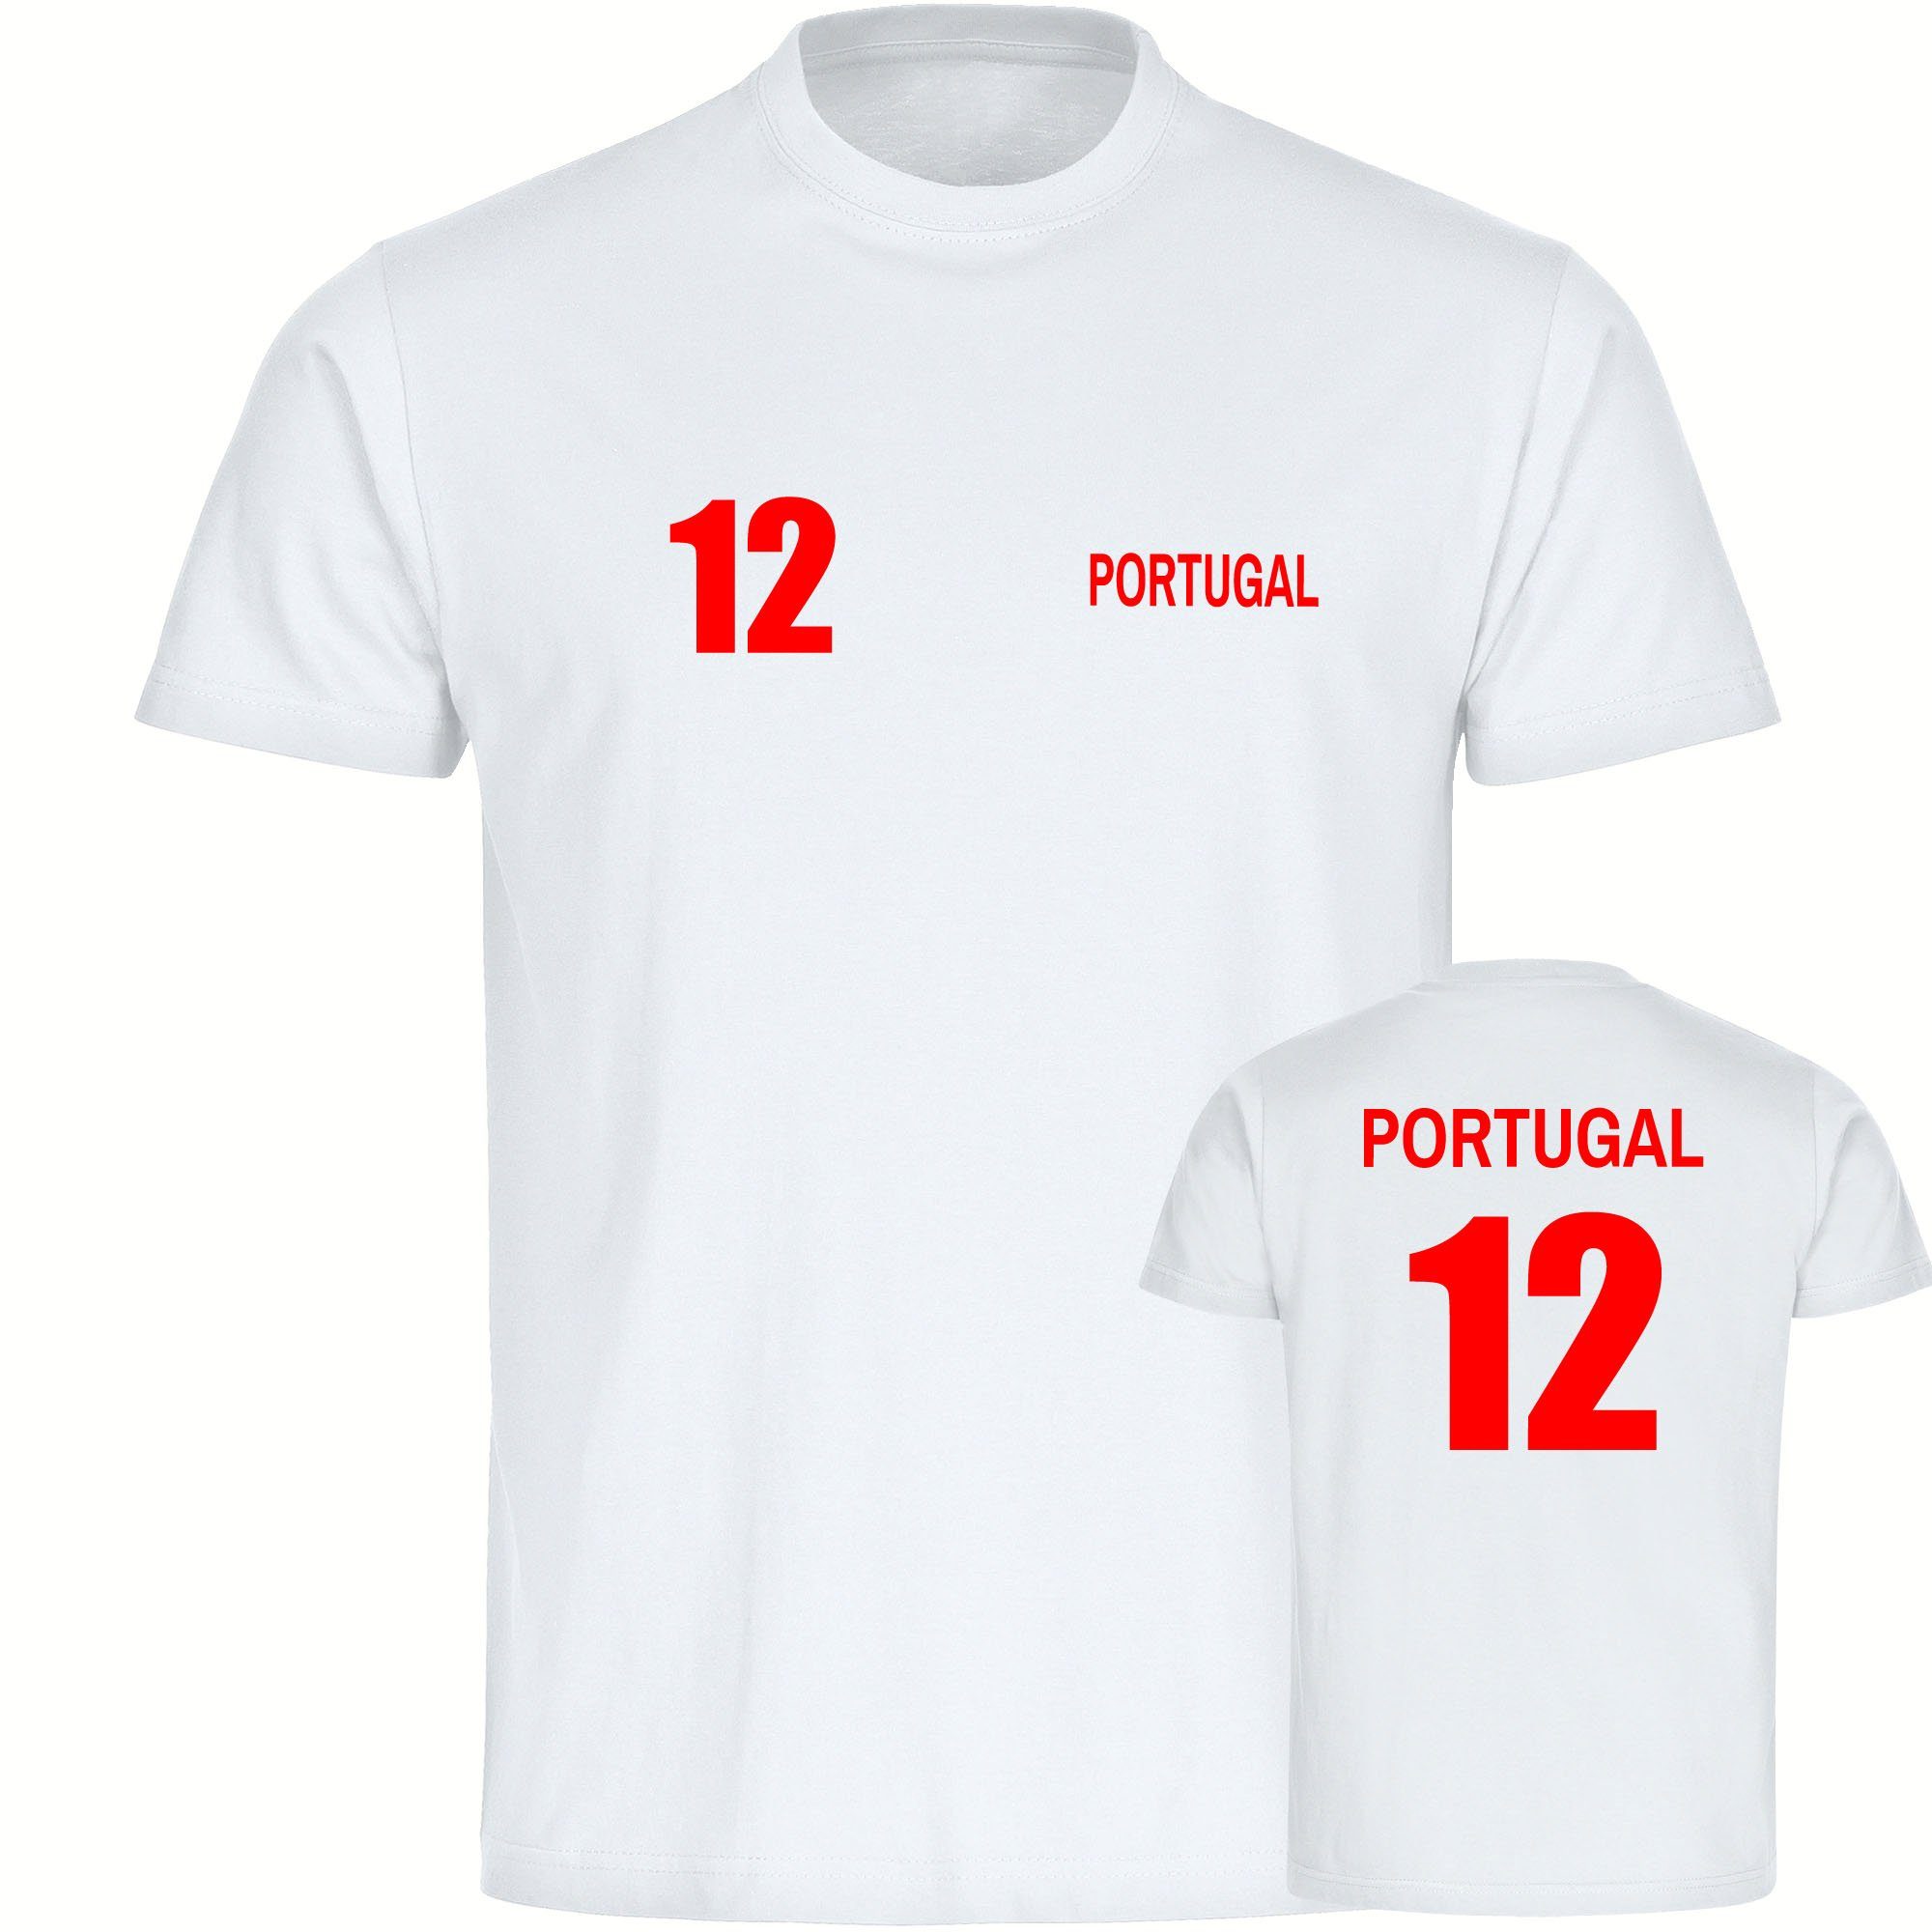 multifanshop T-Shirt Herren Portugal - Trikot 12 - Männer